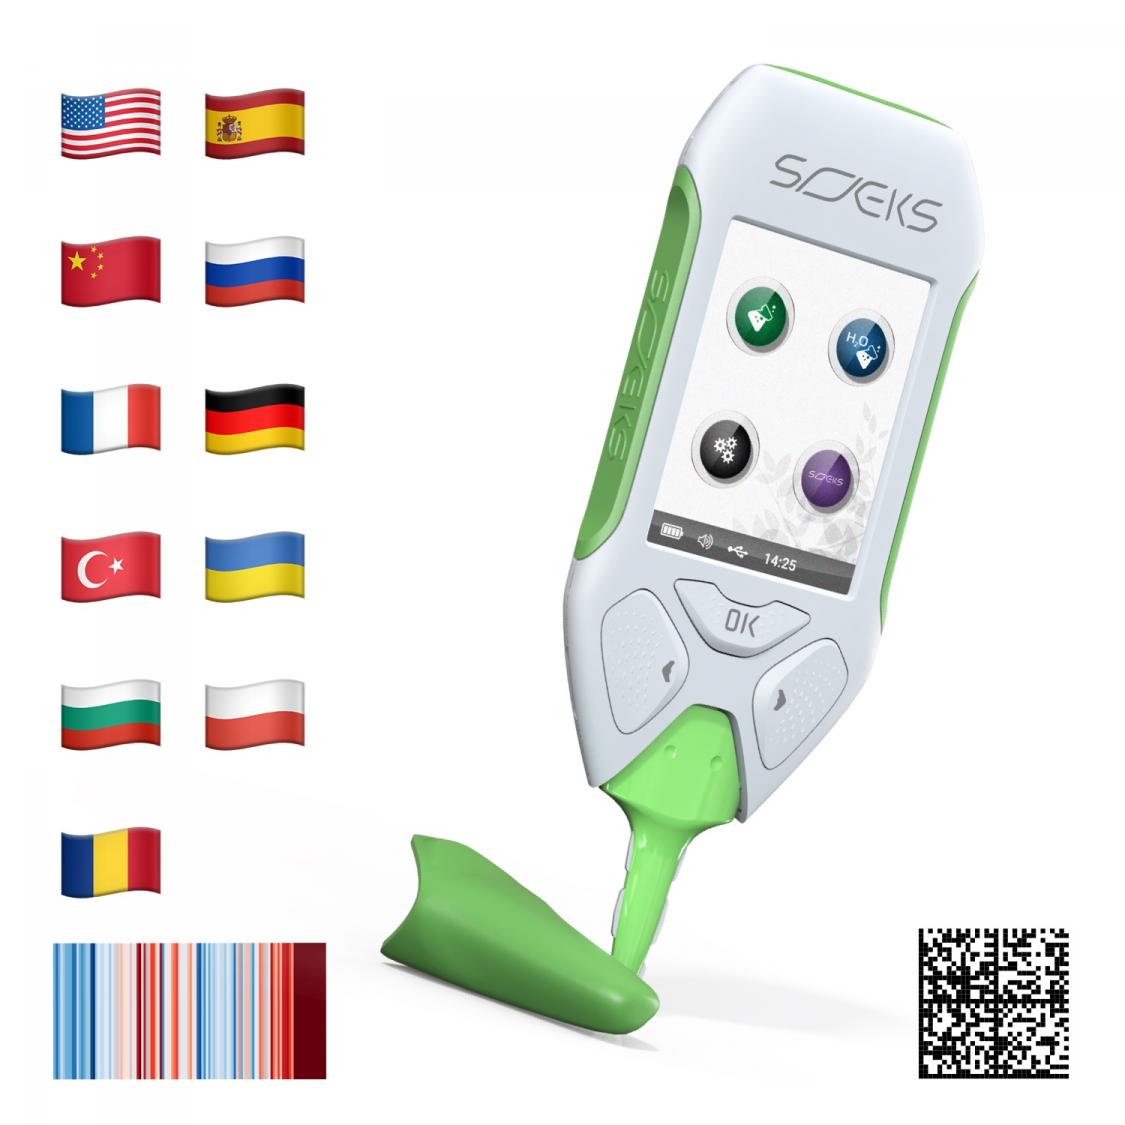 SOEKS EcoVisor F2 interface is available in 11 languages: English, Spanish, Chinese, Russian, French, German, Turkish, Ukrainian, Bulgarian, Poland, Romanian!